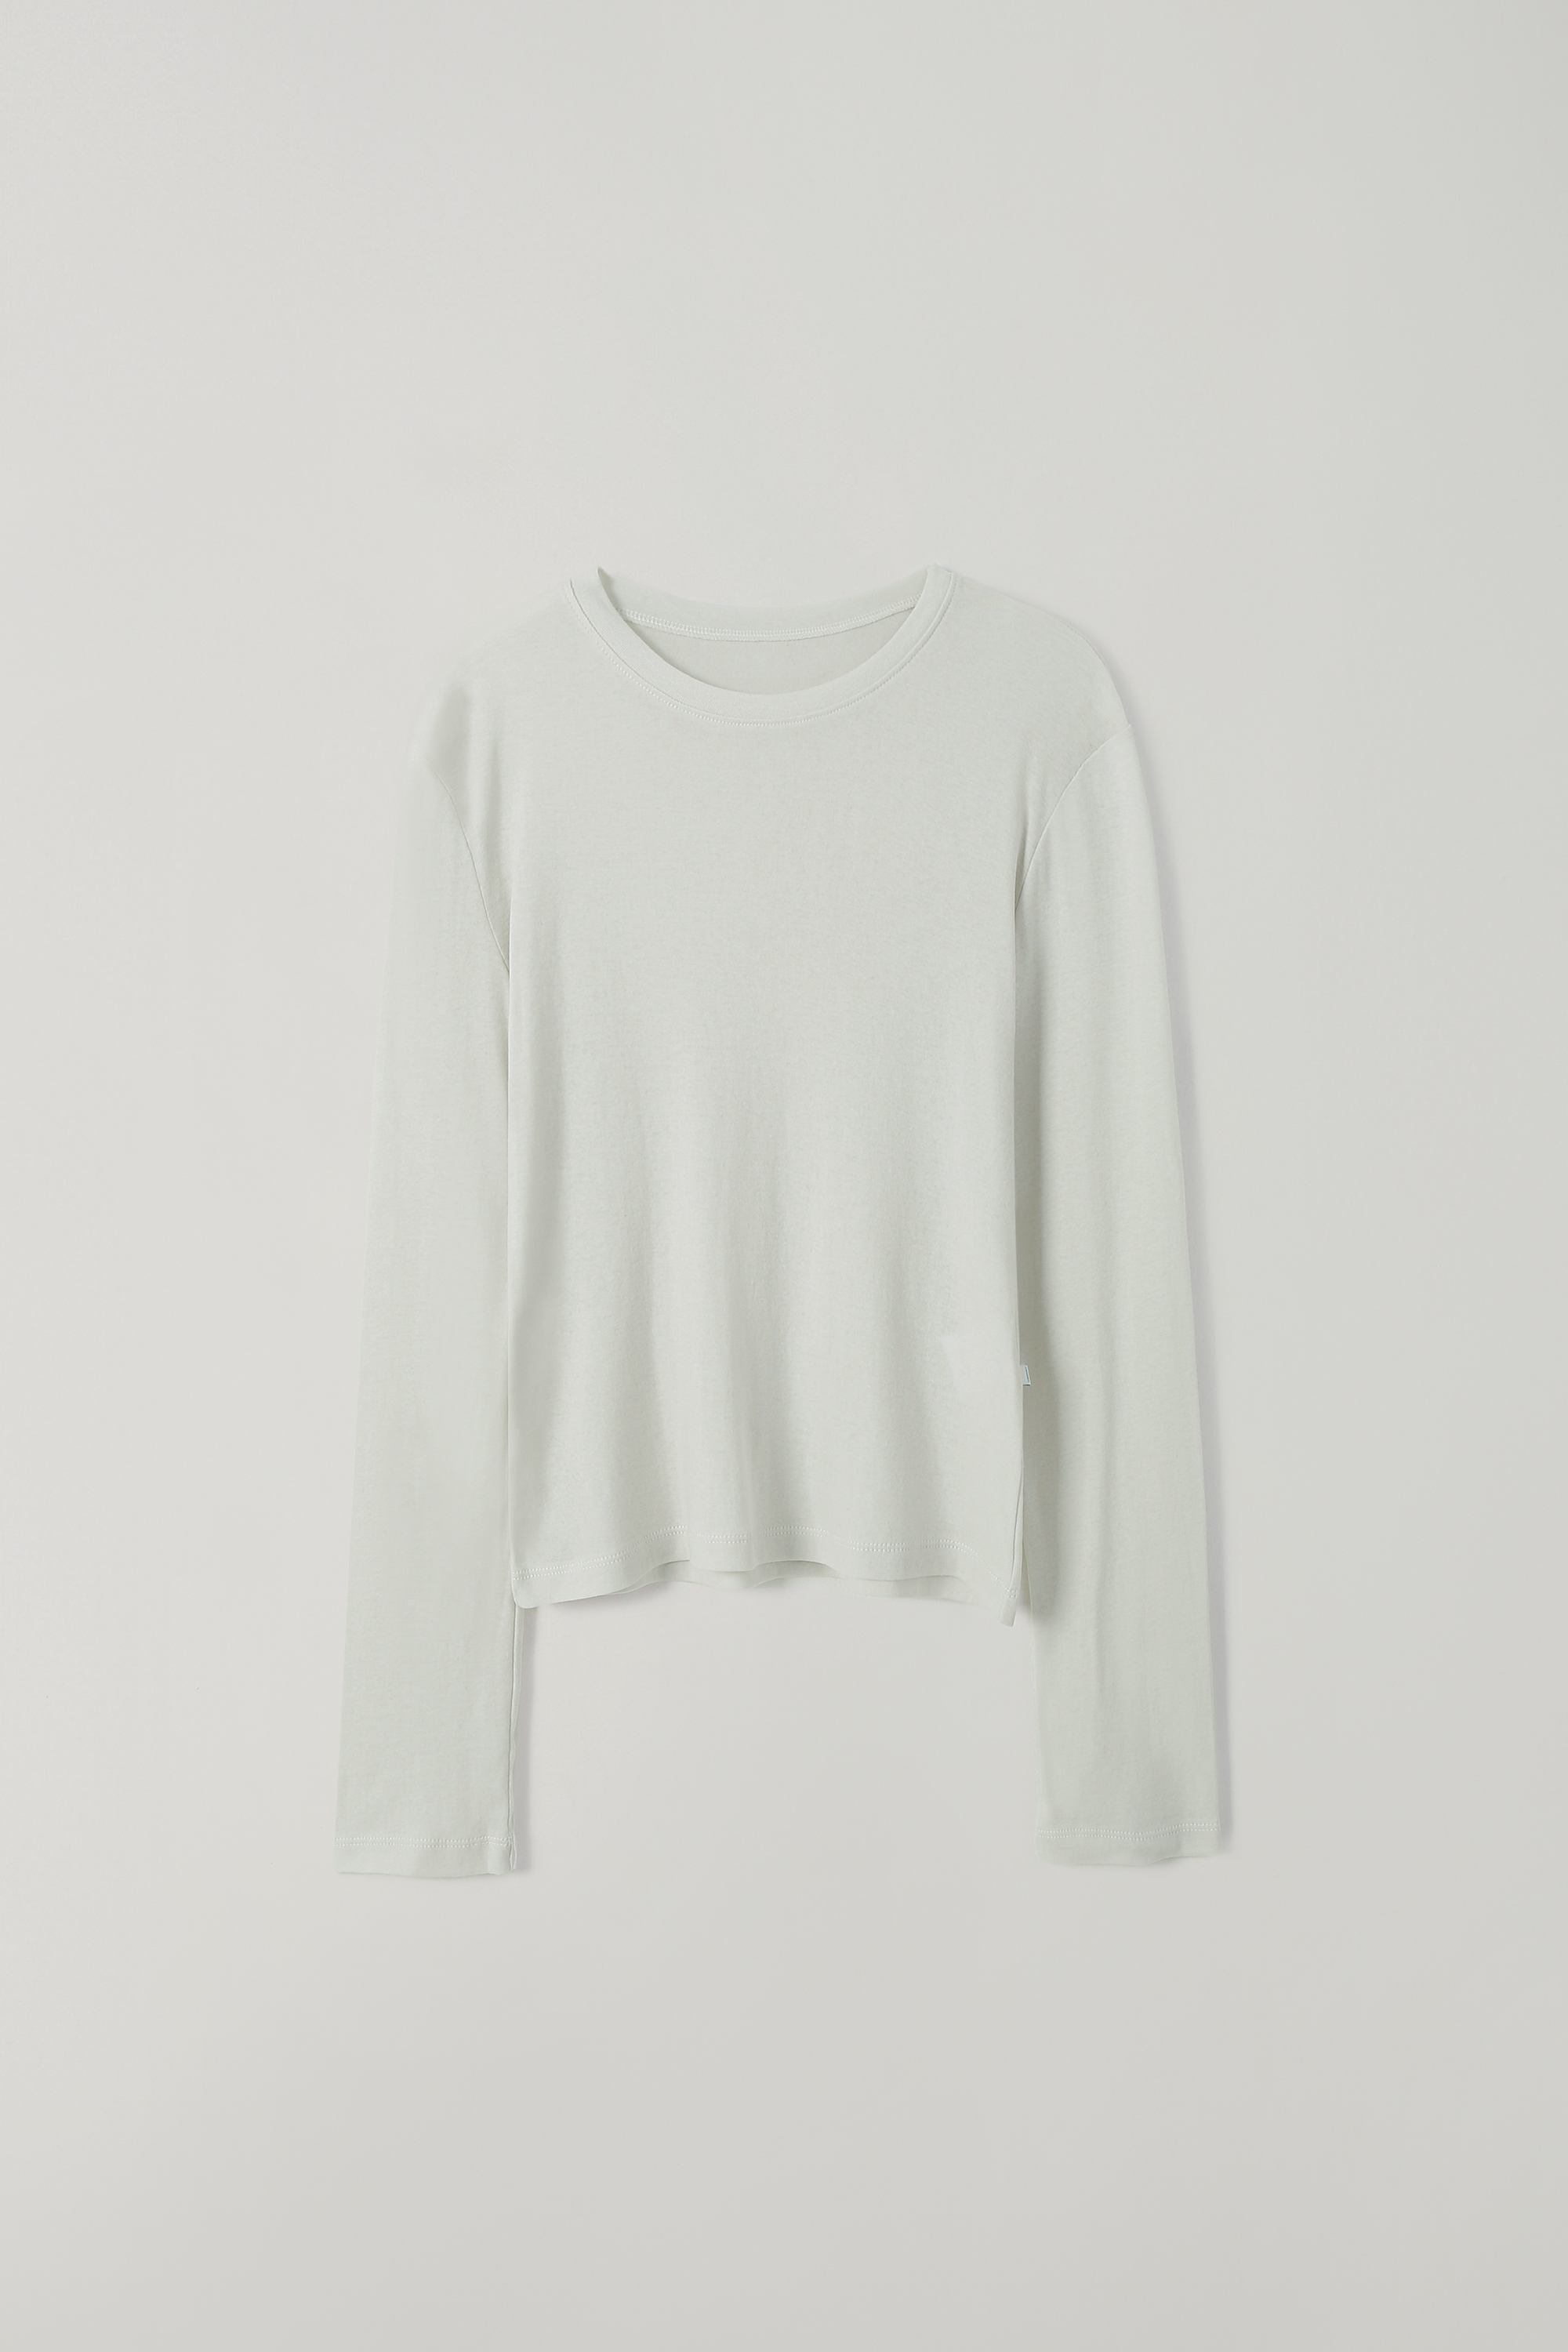 (2nd re-stock) T/T Pastel soft t-shirt (mint)